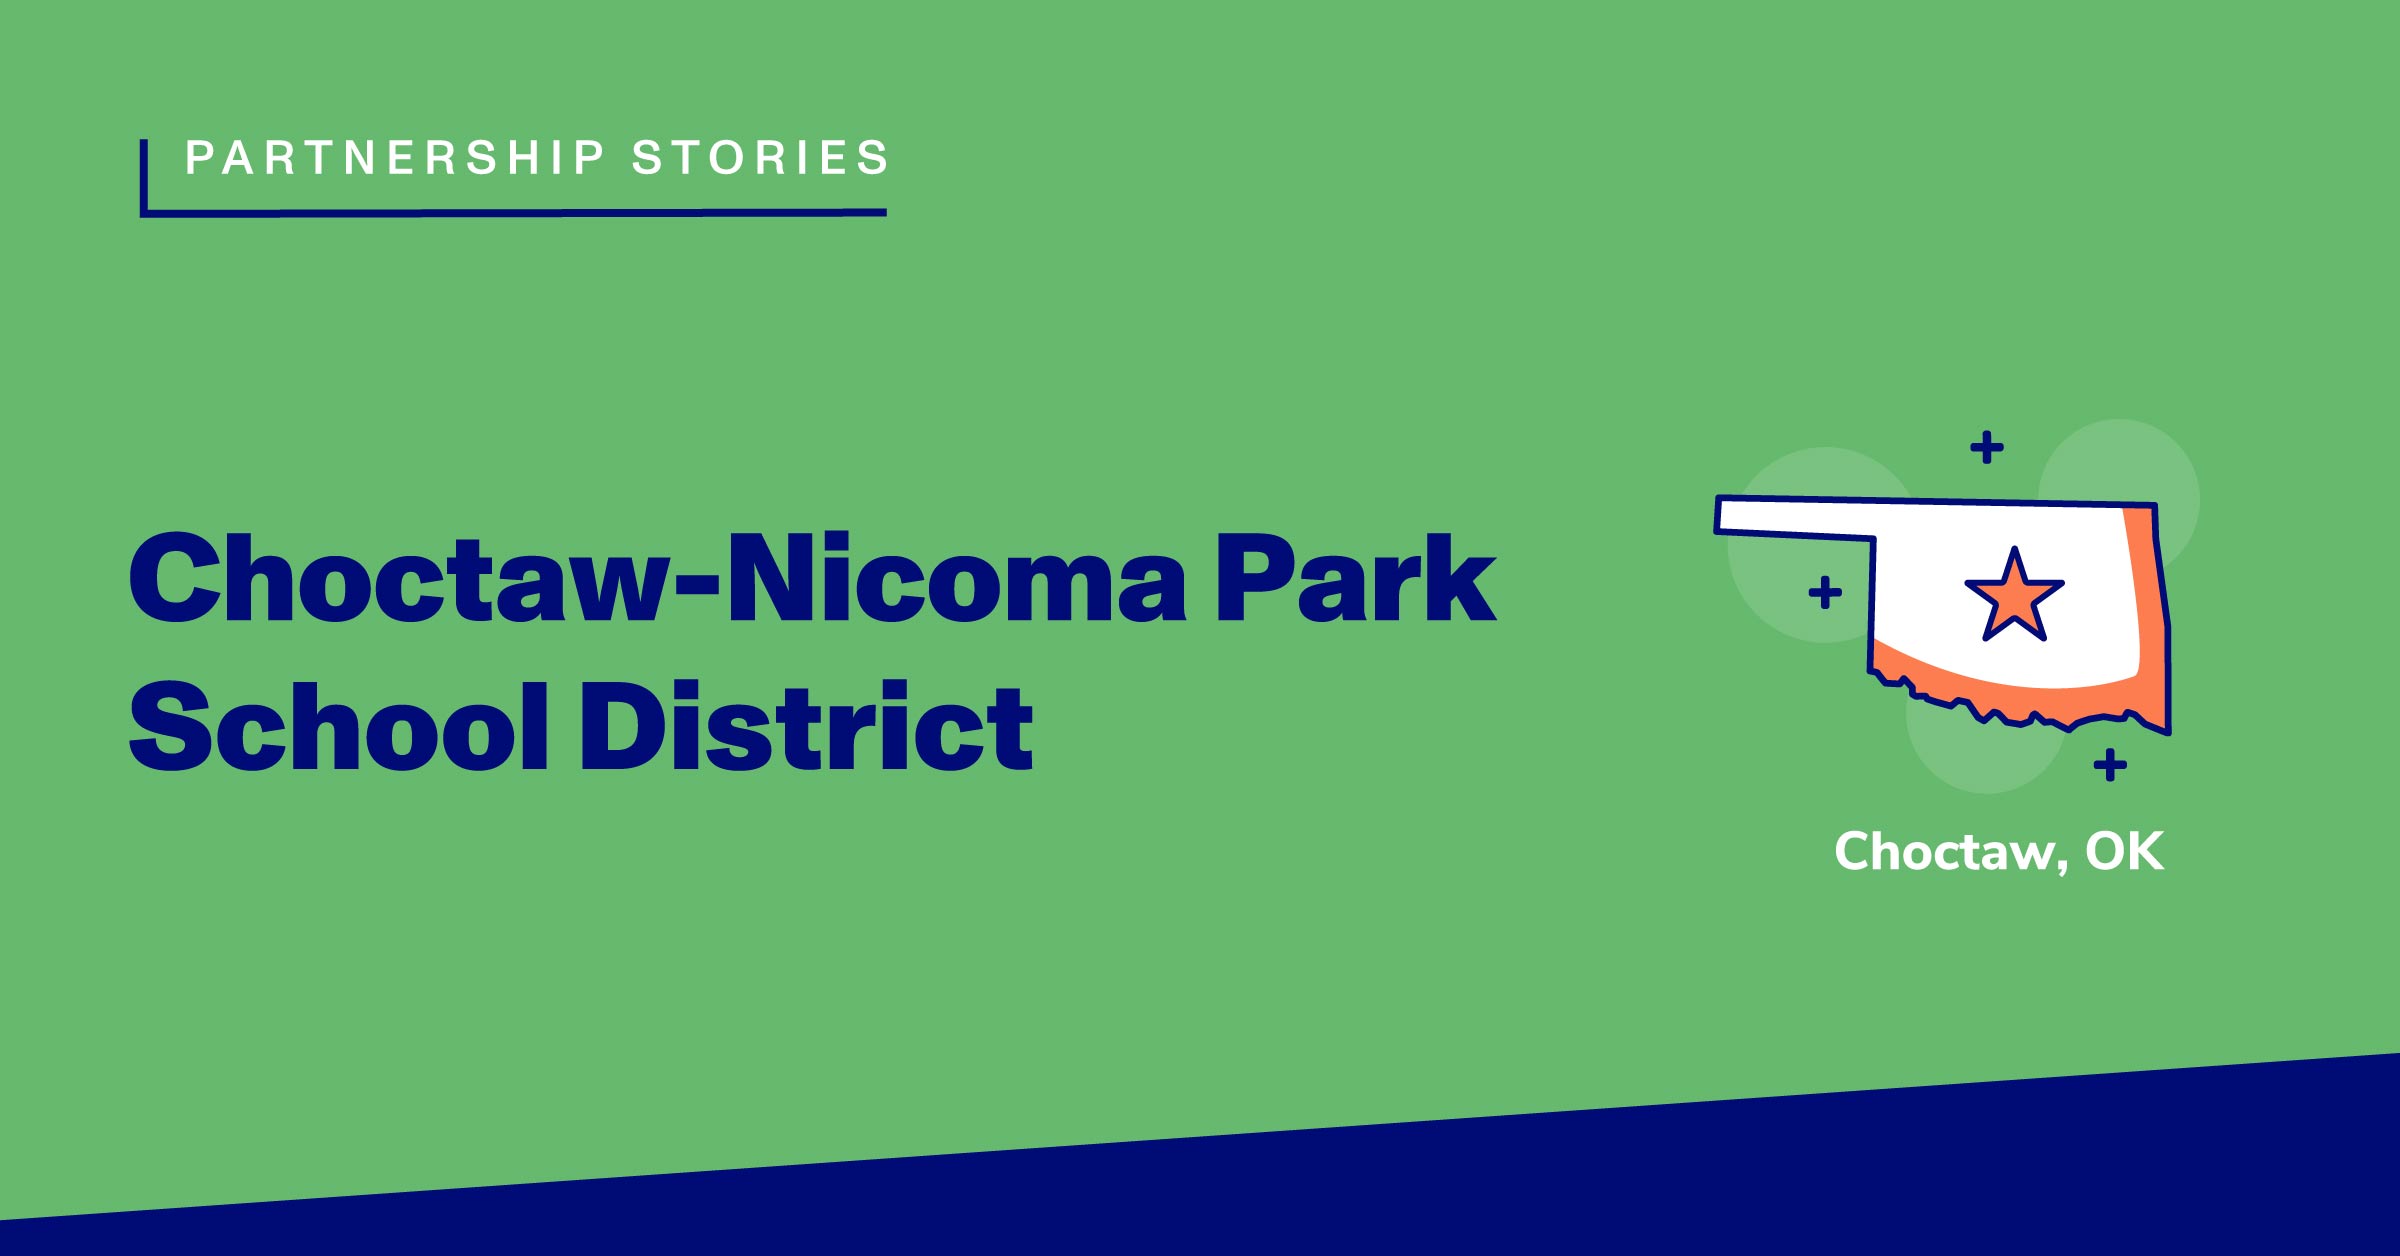 Choctaw-Nicoma Park School District: Choctaw, Oklahoma